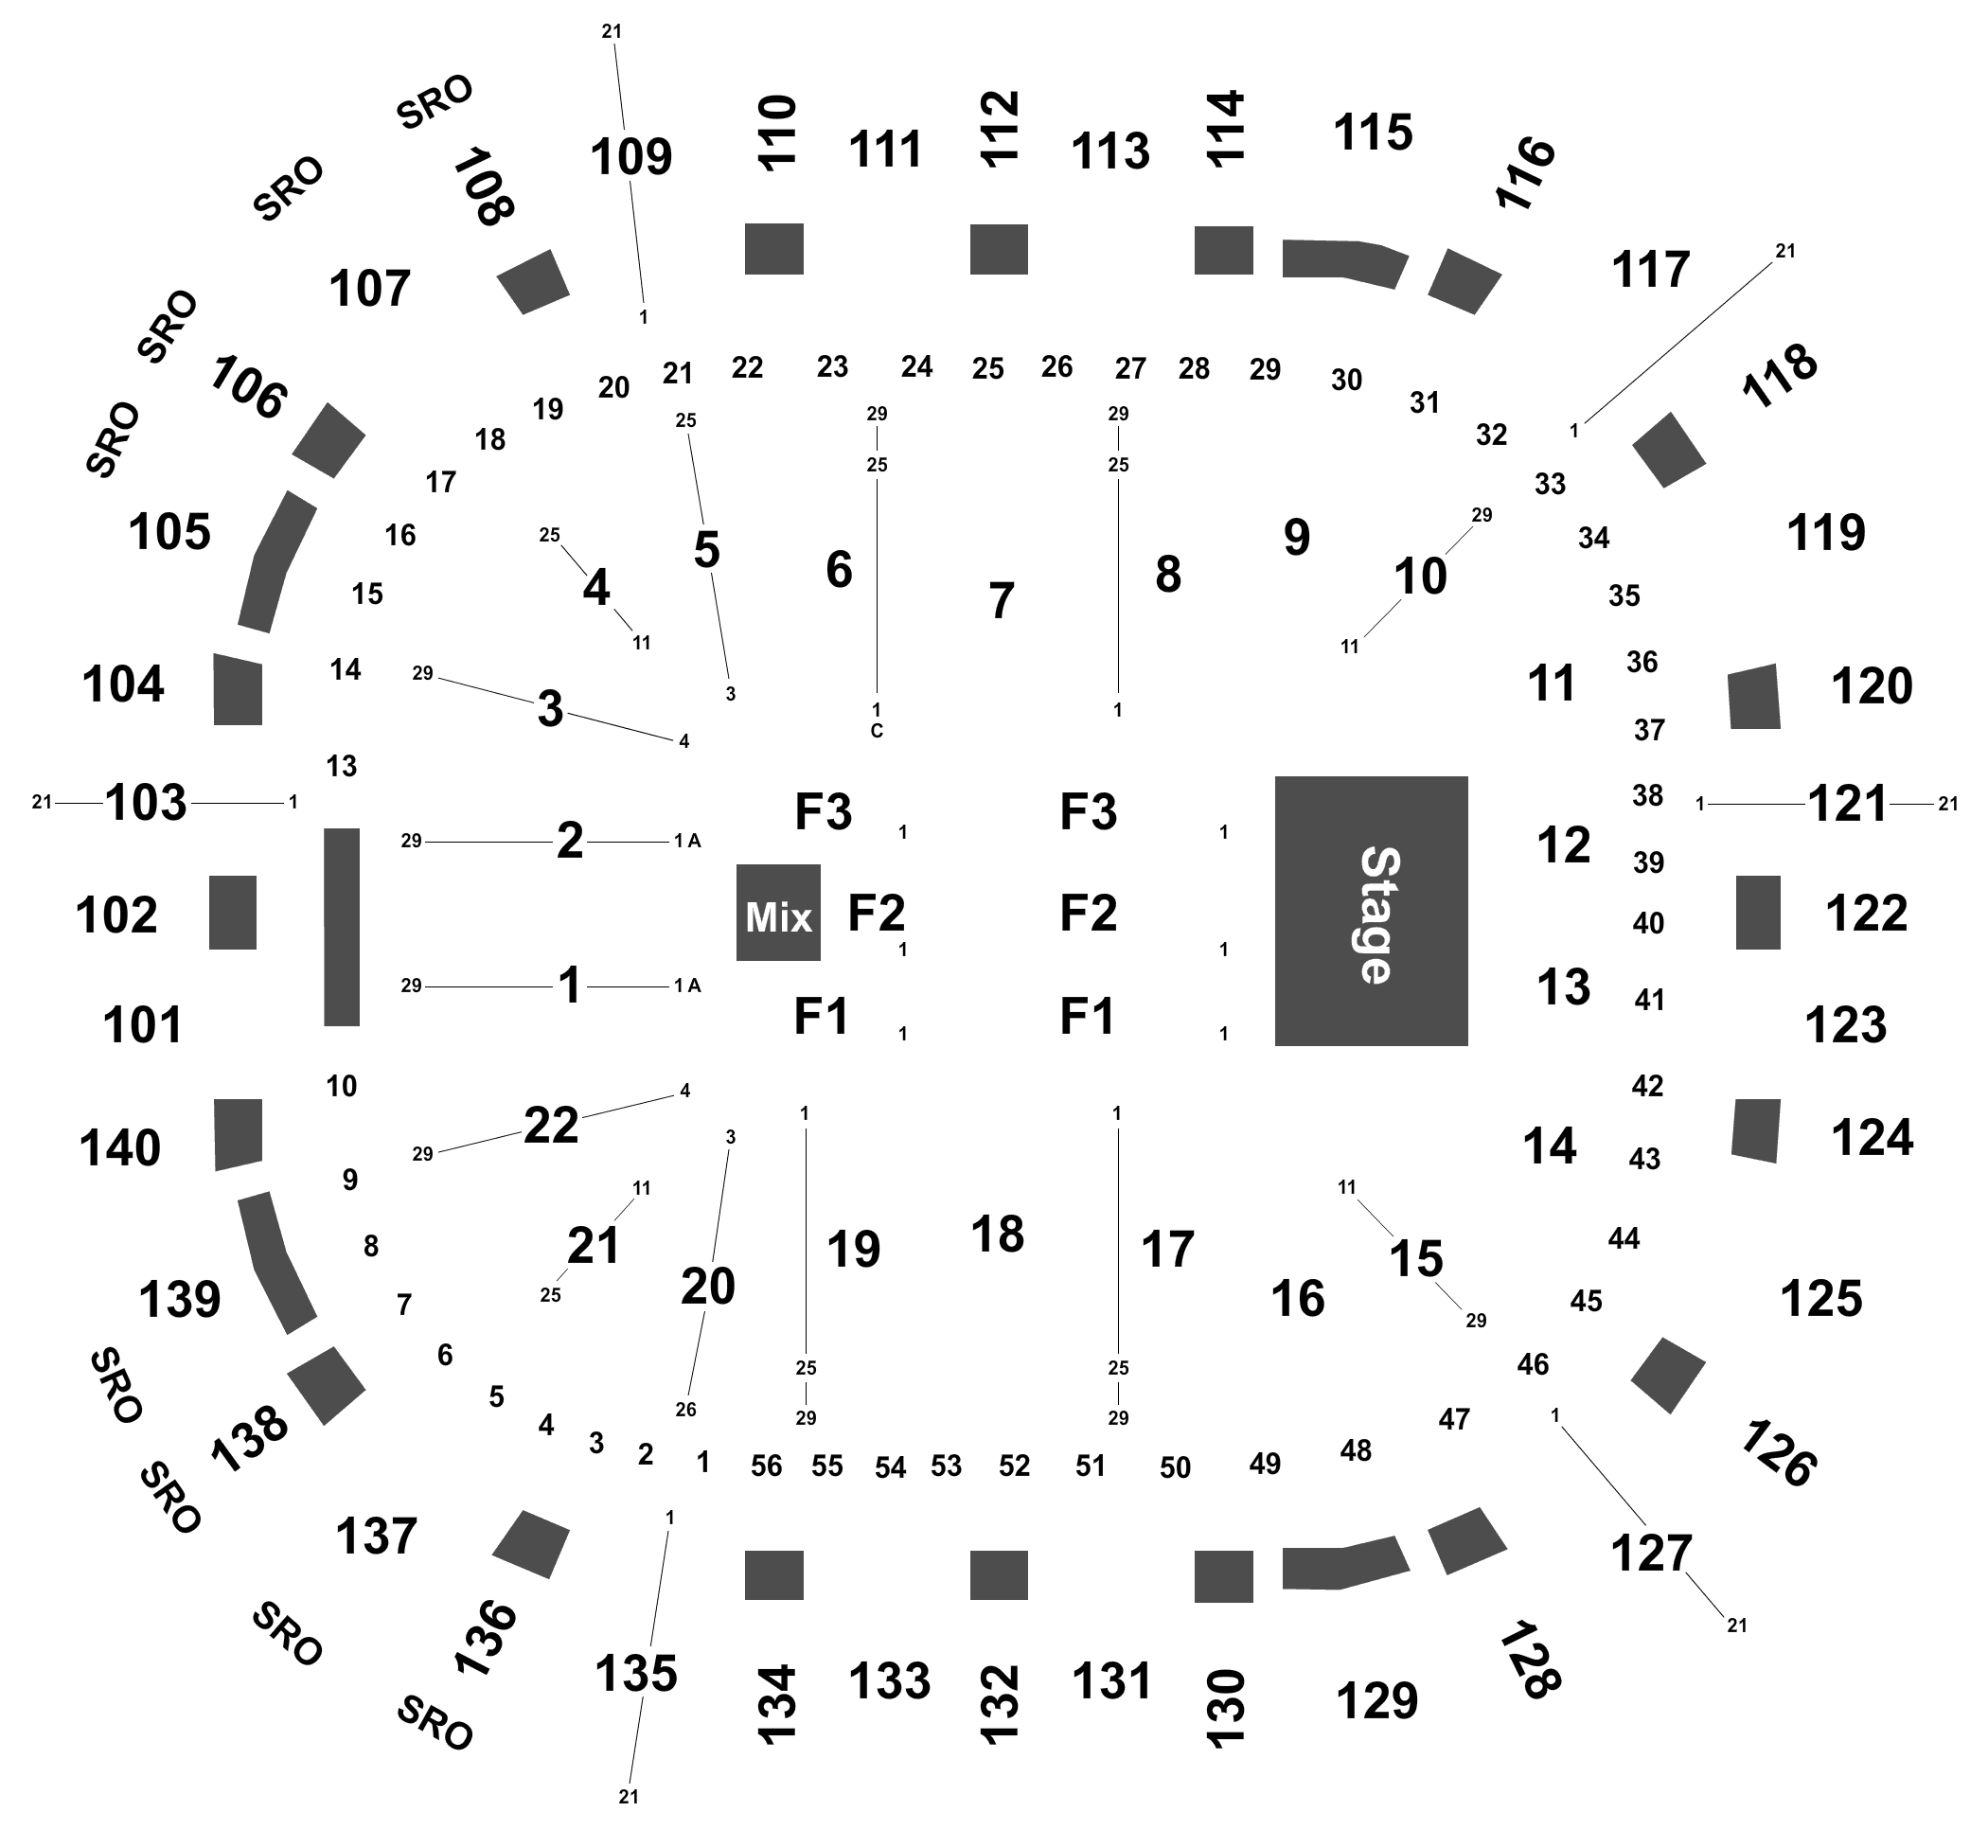 Vivint Smart Home Arena Salt Lake City Ut Seating Chart